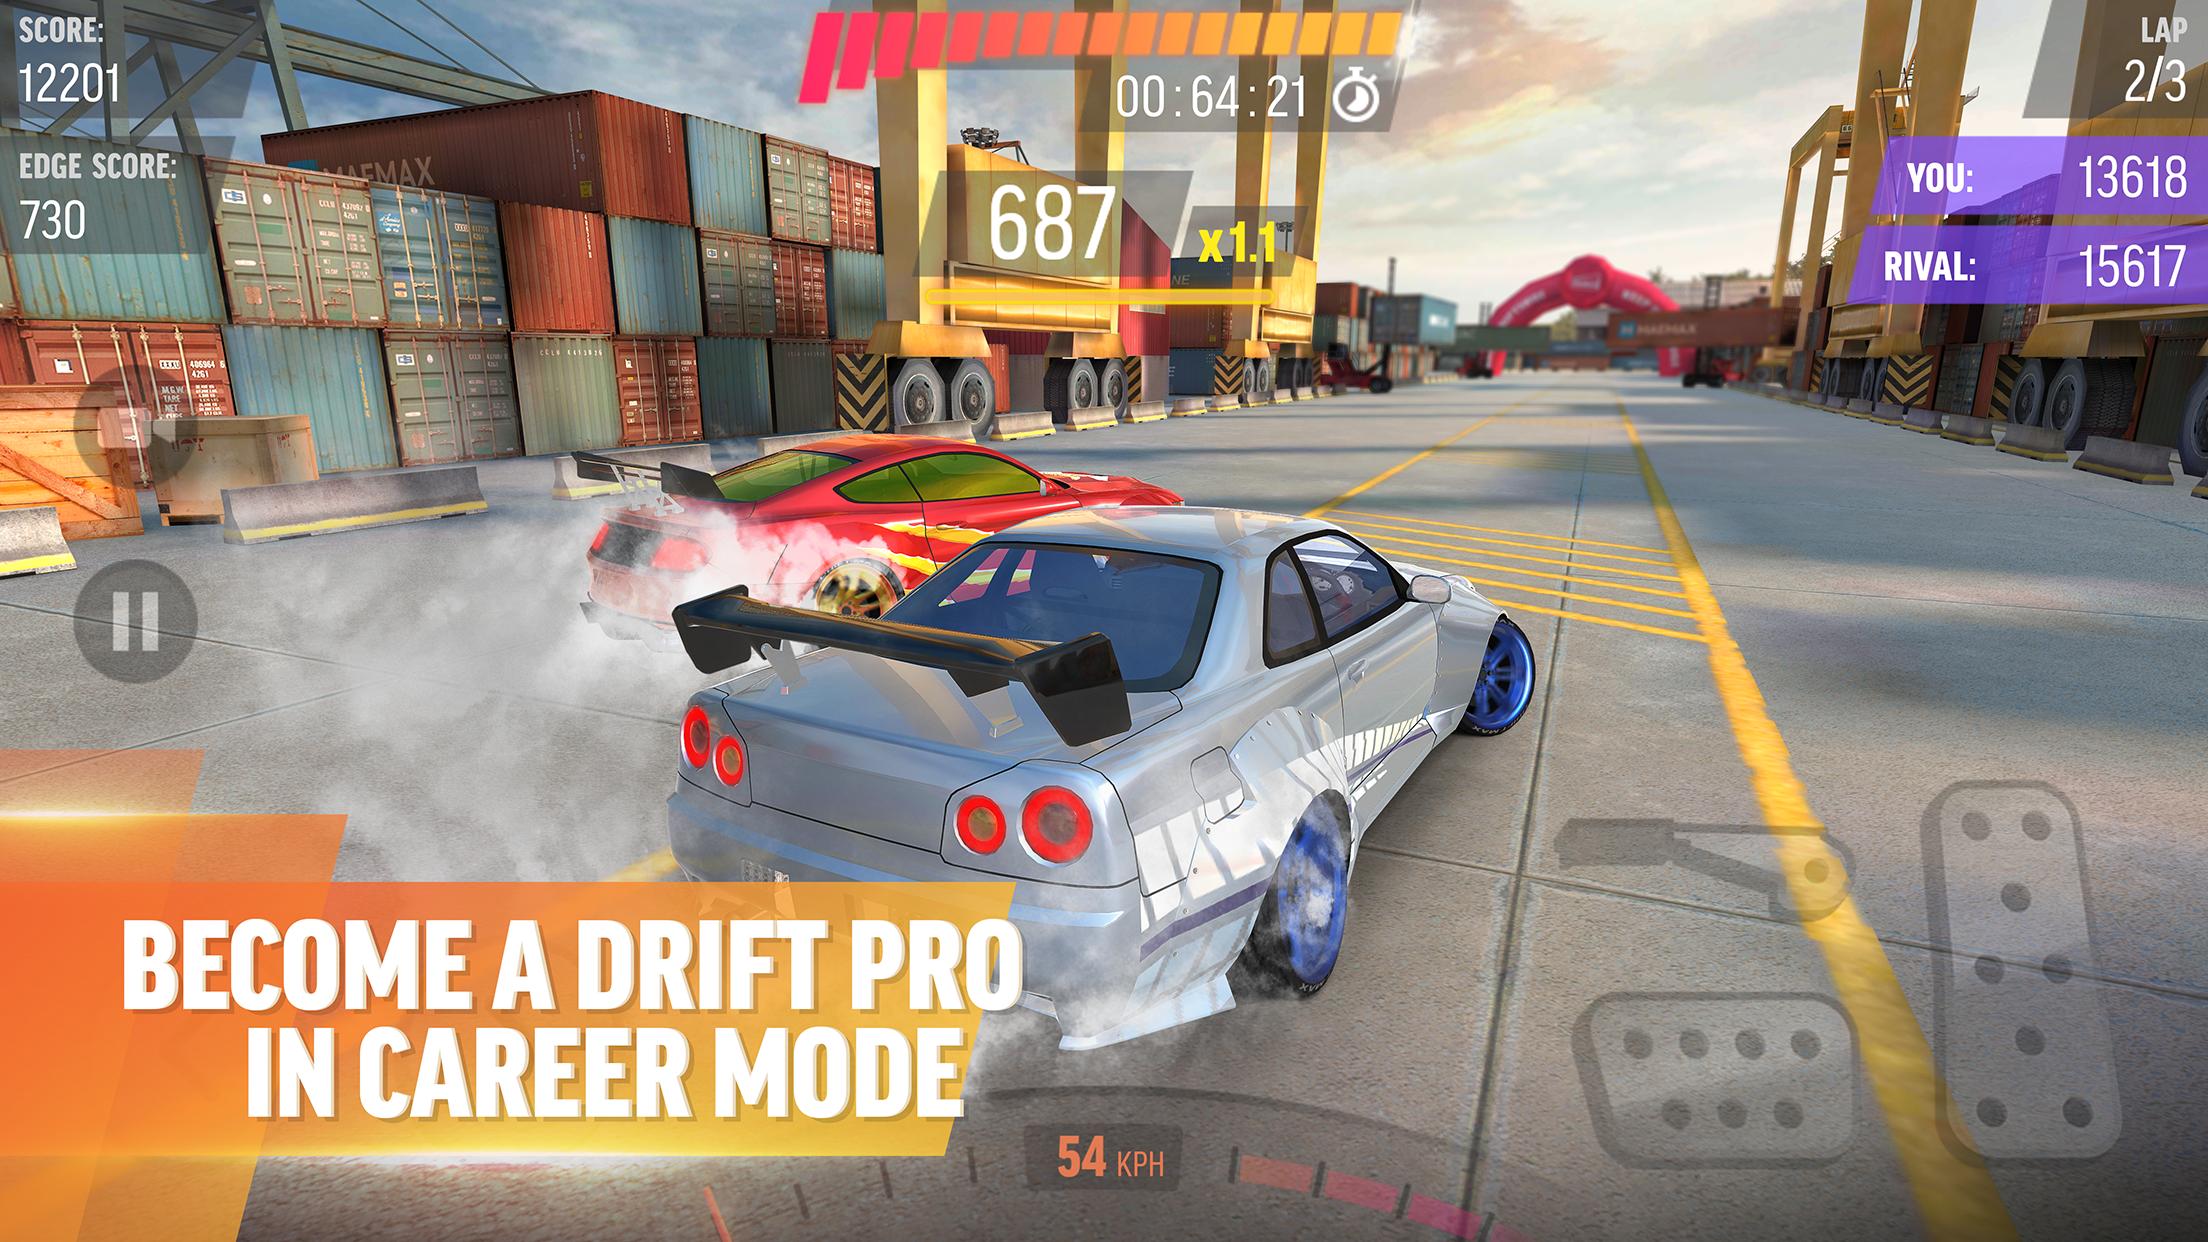 Drift Max Pro Car Drifting Game with Racing Cars 2.4.60 Screenshot 4